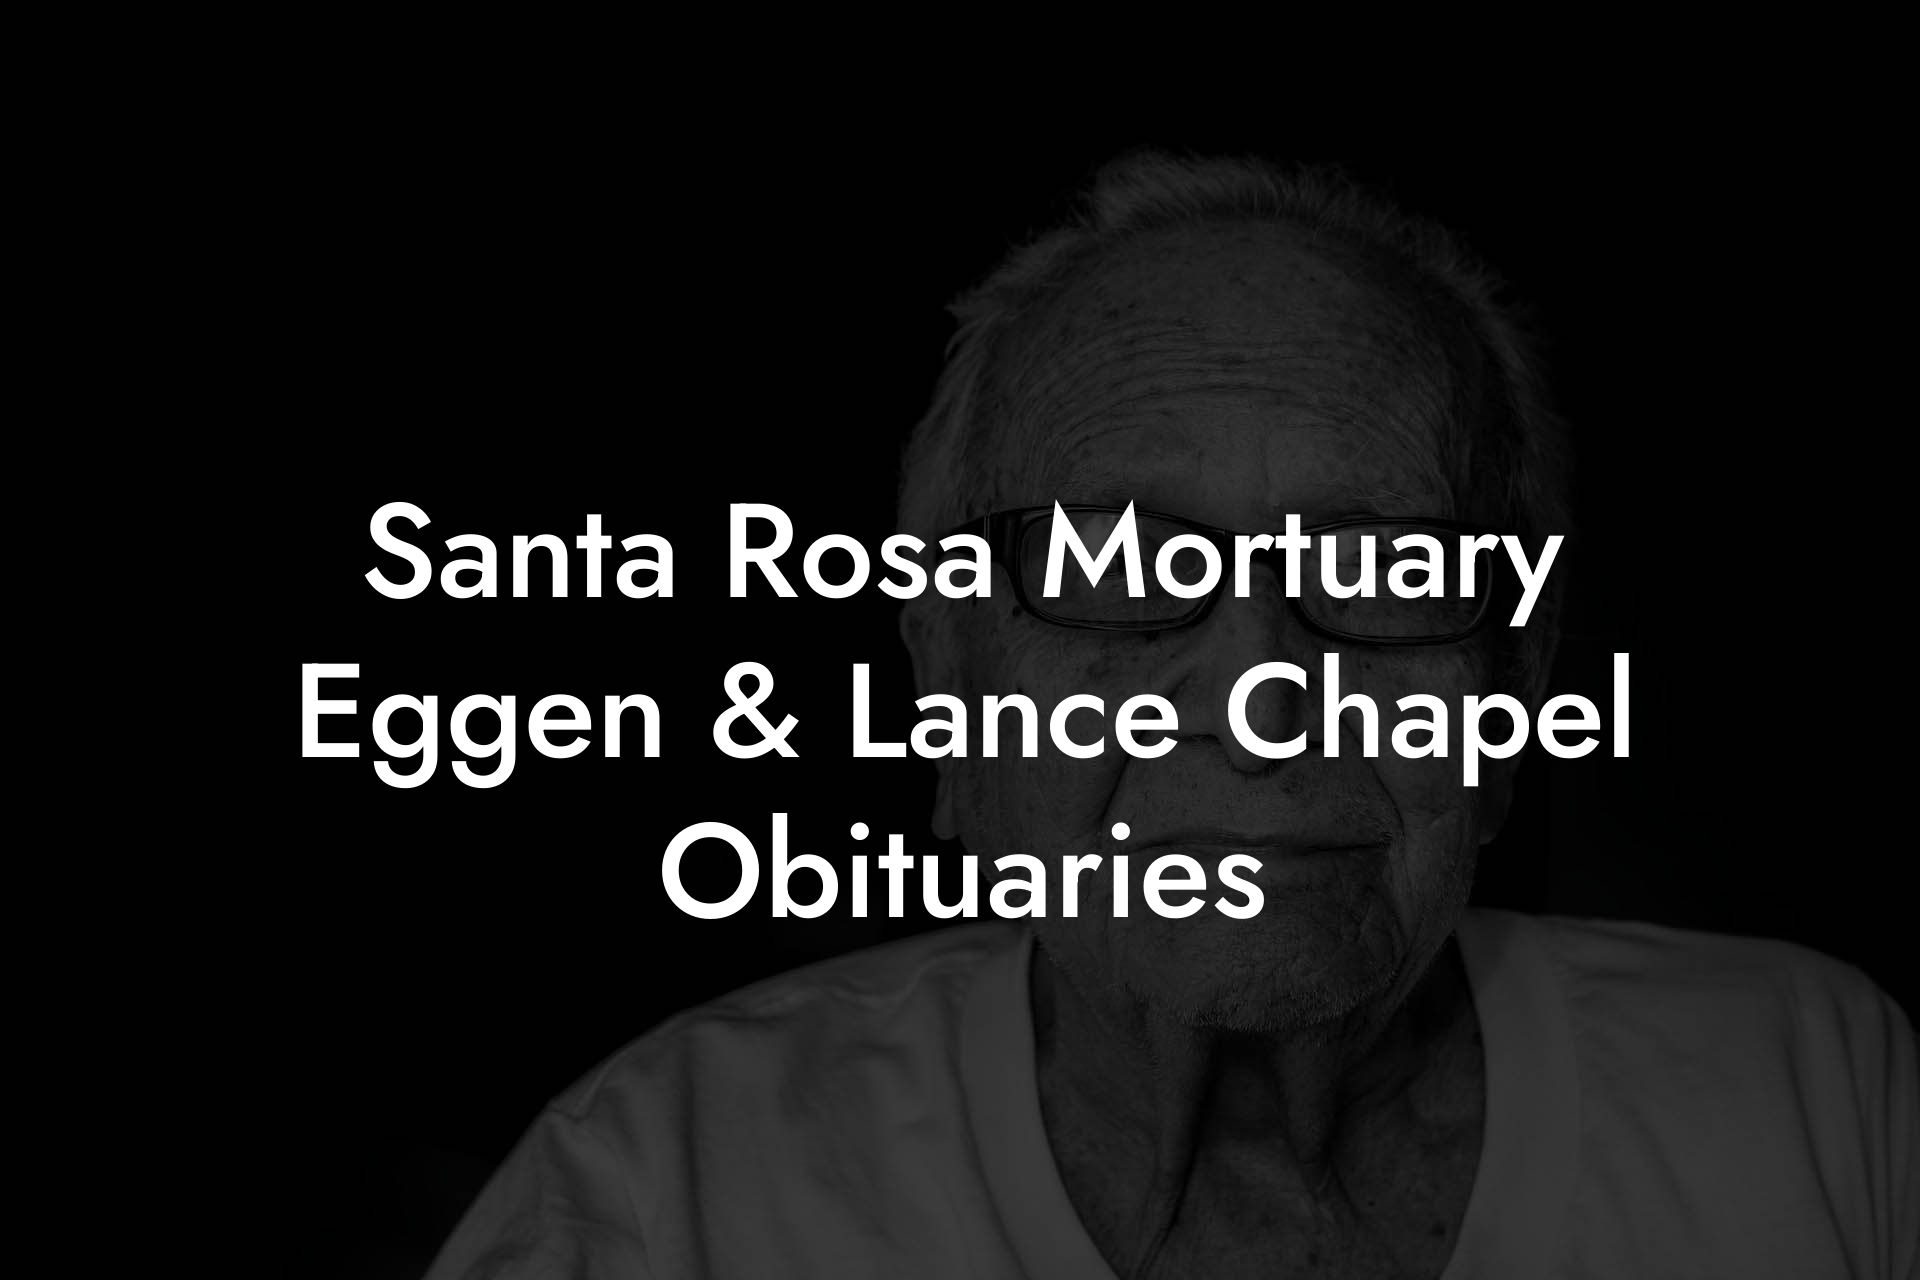 Santa Rosa Mortuary Eggen & Lance Chapel Obituaries